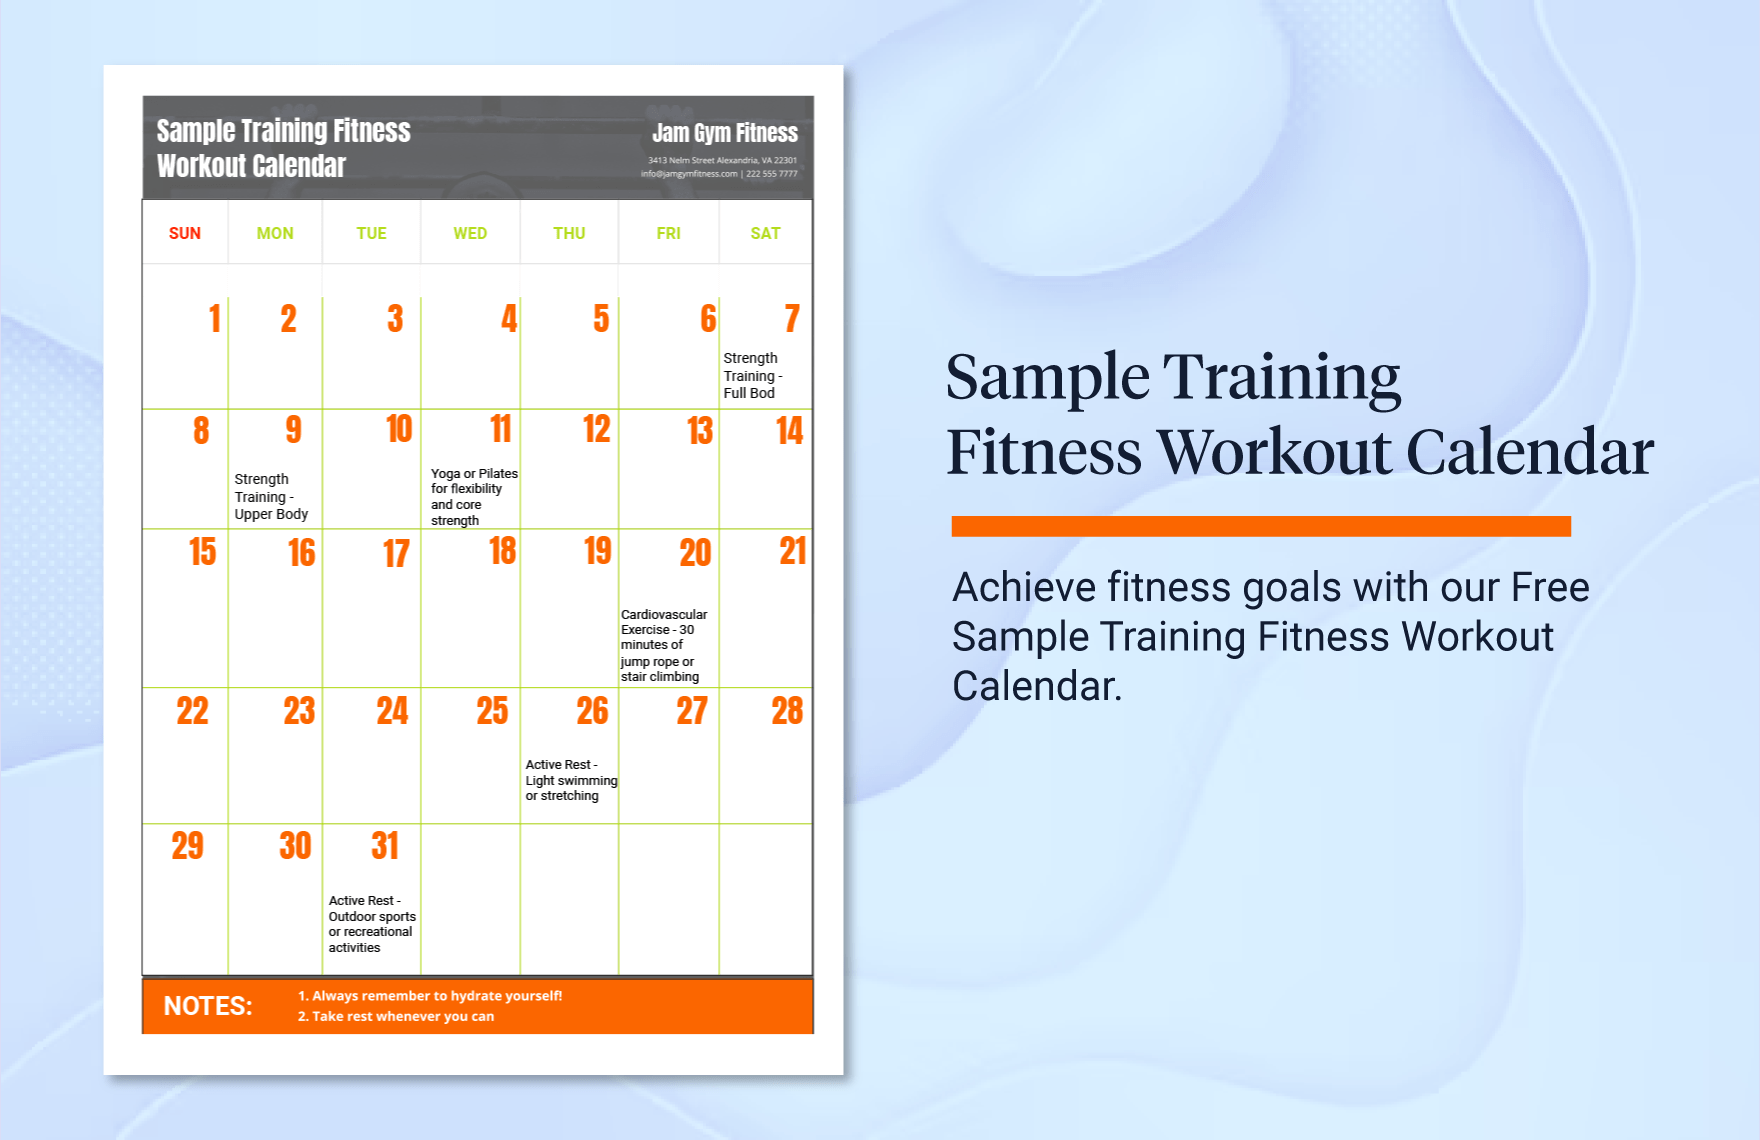  Sample Training Fitness Workout Calendar